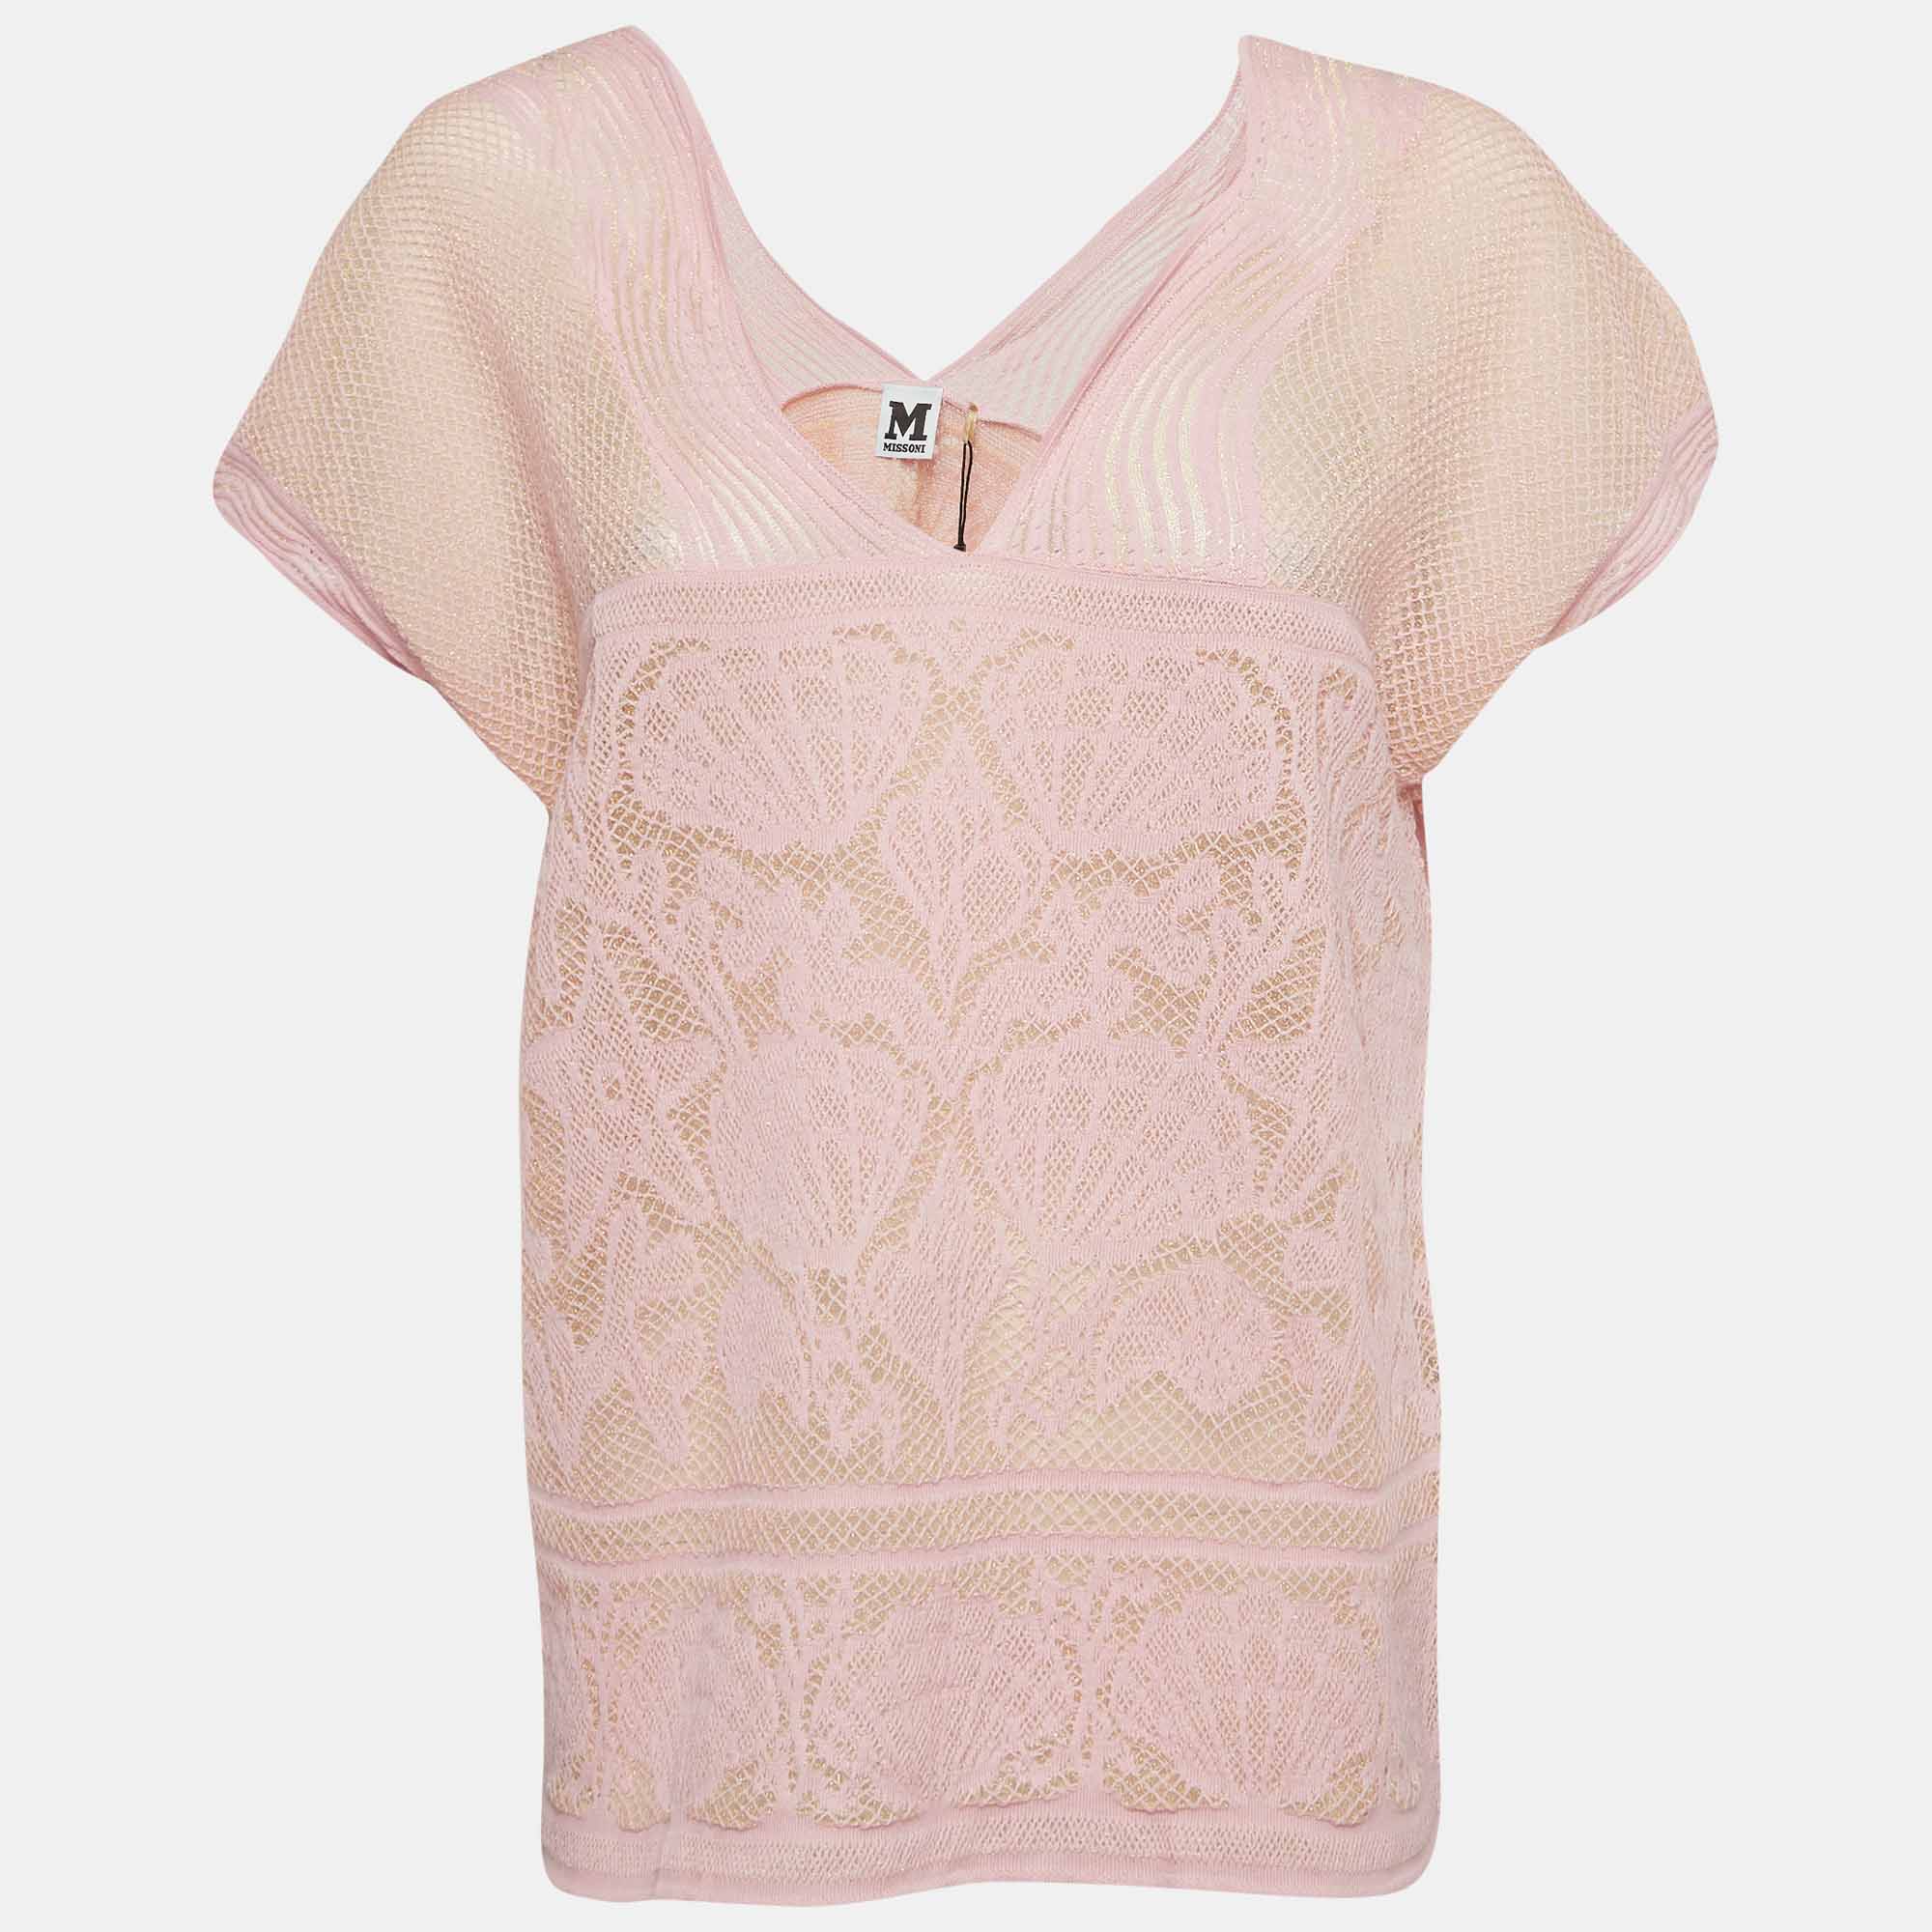 

M Missoni Pink Patterned Lurex Knit Top